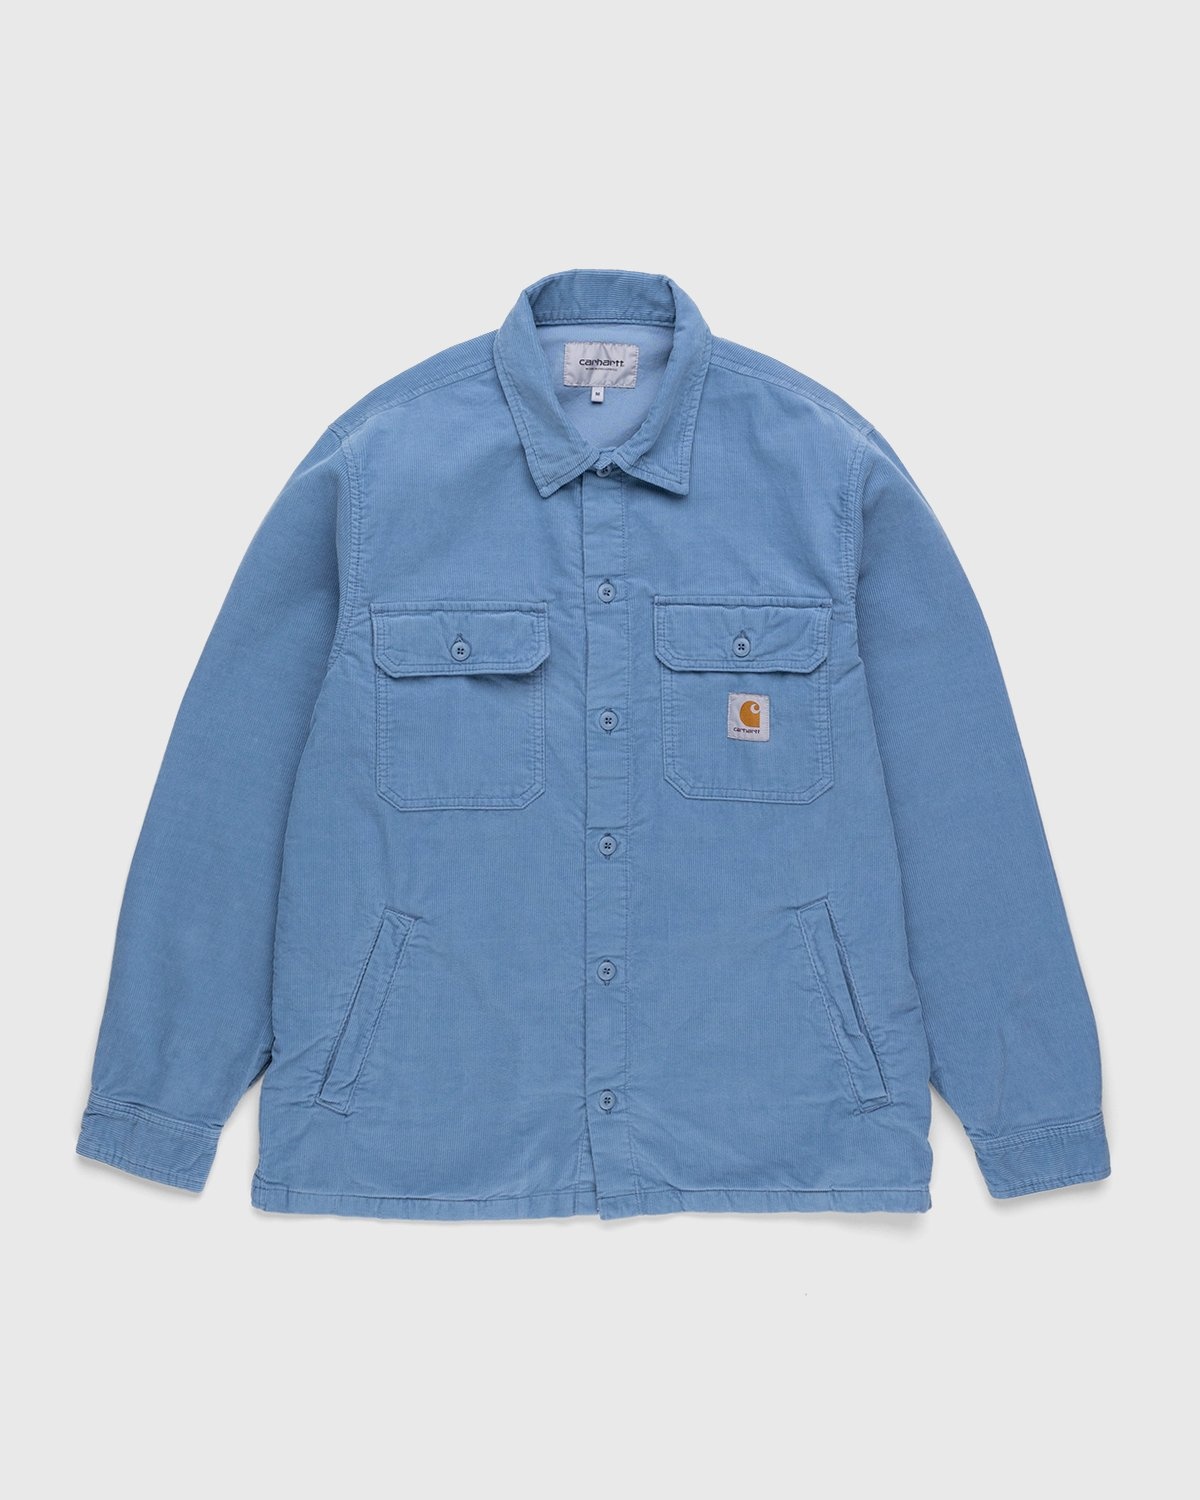 Carhartt WIP – Dixon Shirt Jacket Icy Water Rinsed | Highsnobiety Shop